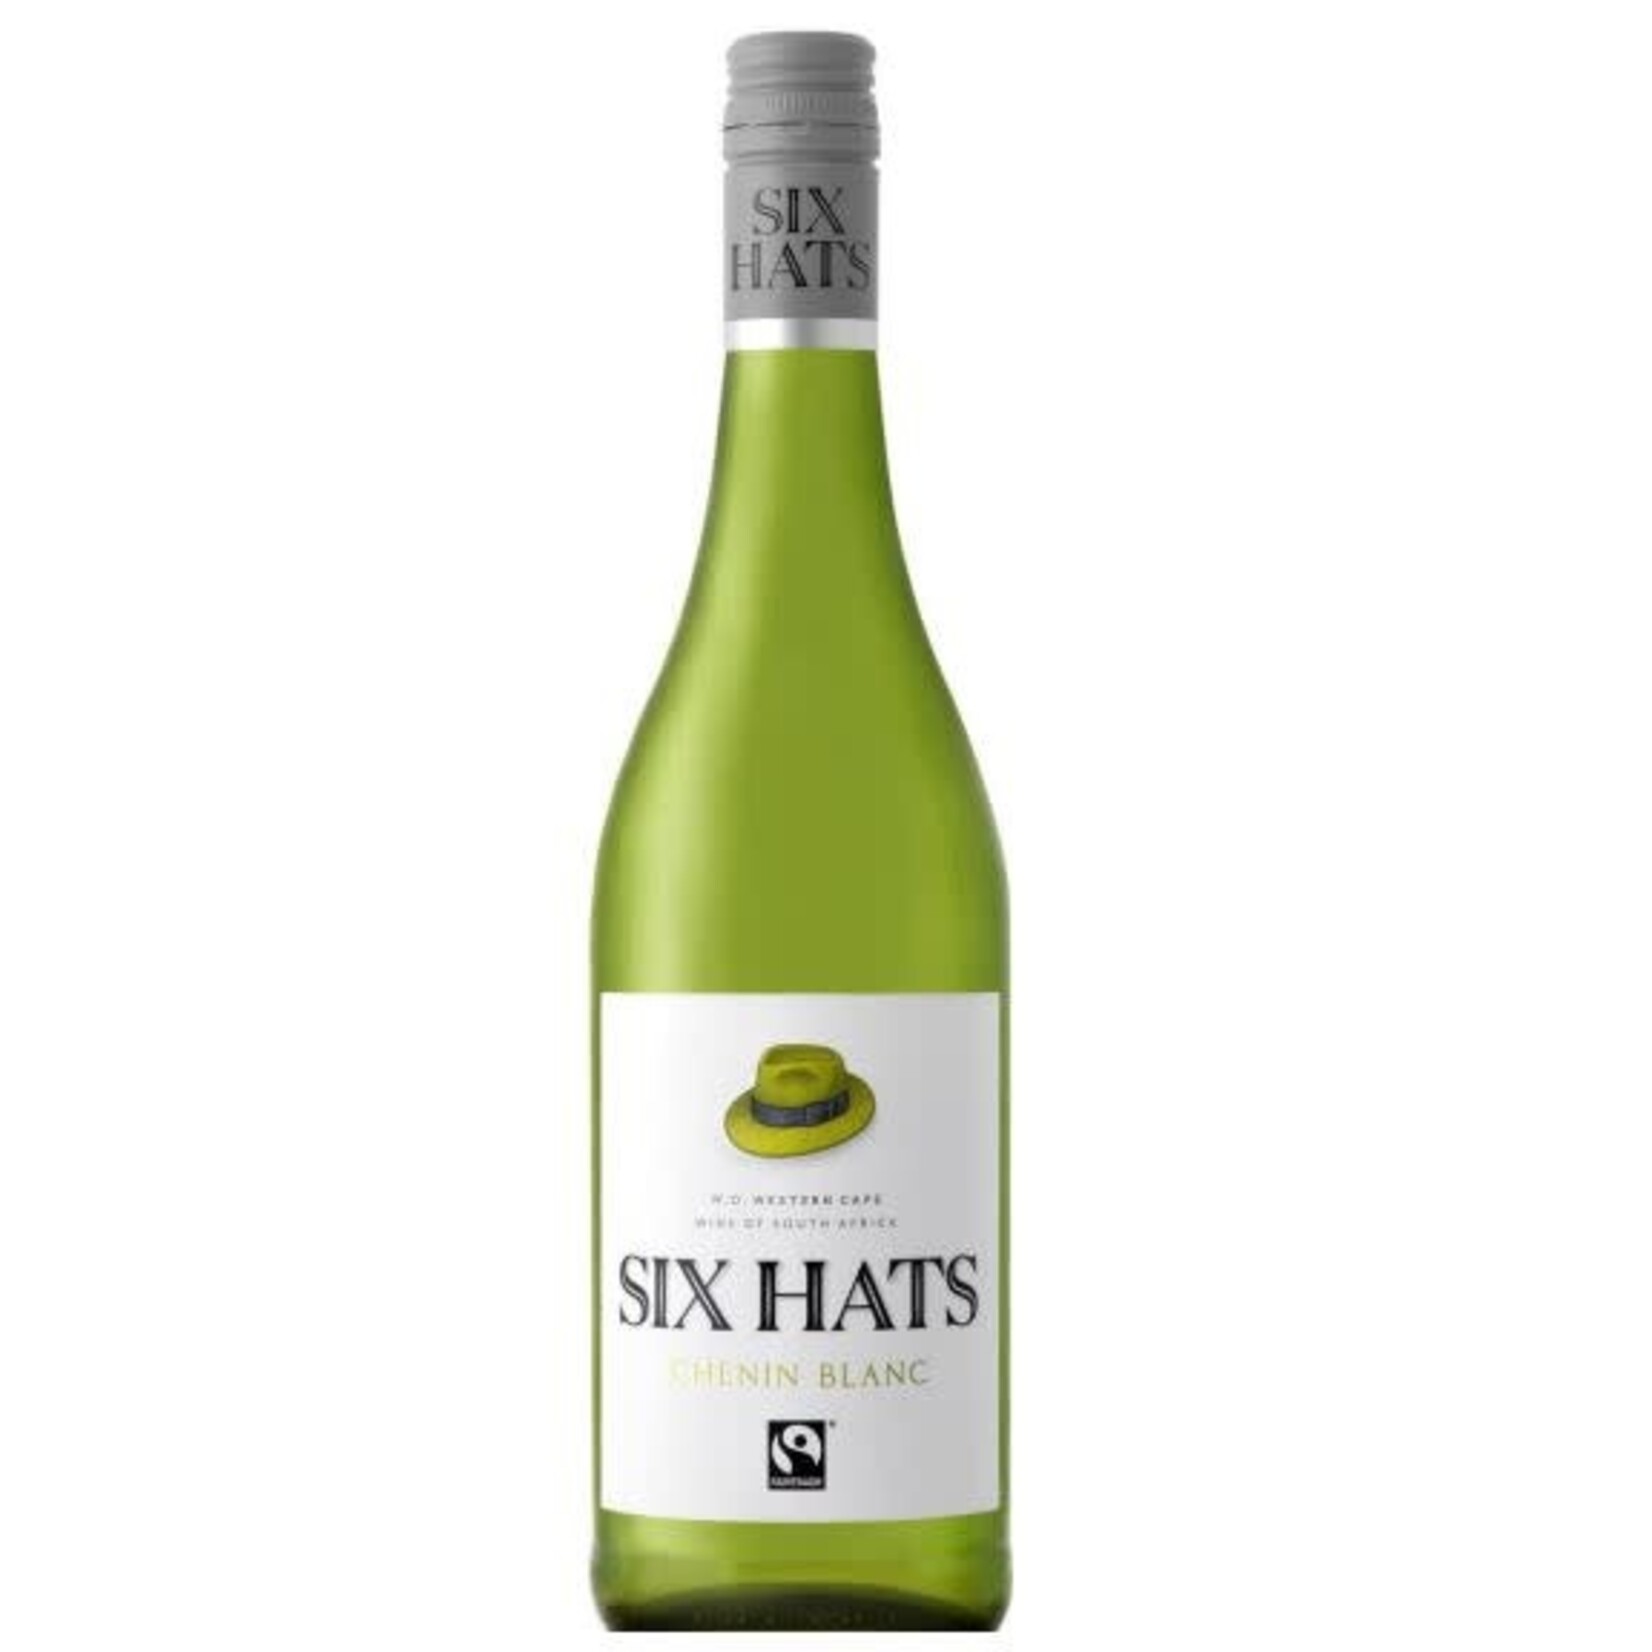 Six Hats Chenin Blanc 2021,  Western Cape South Africa